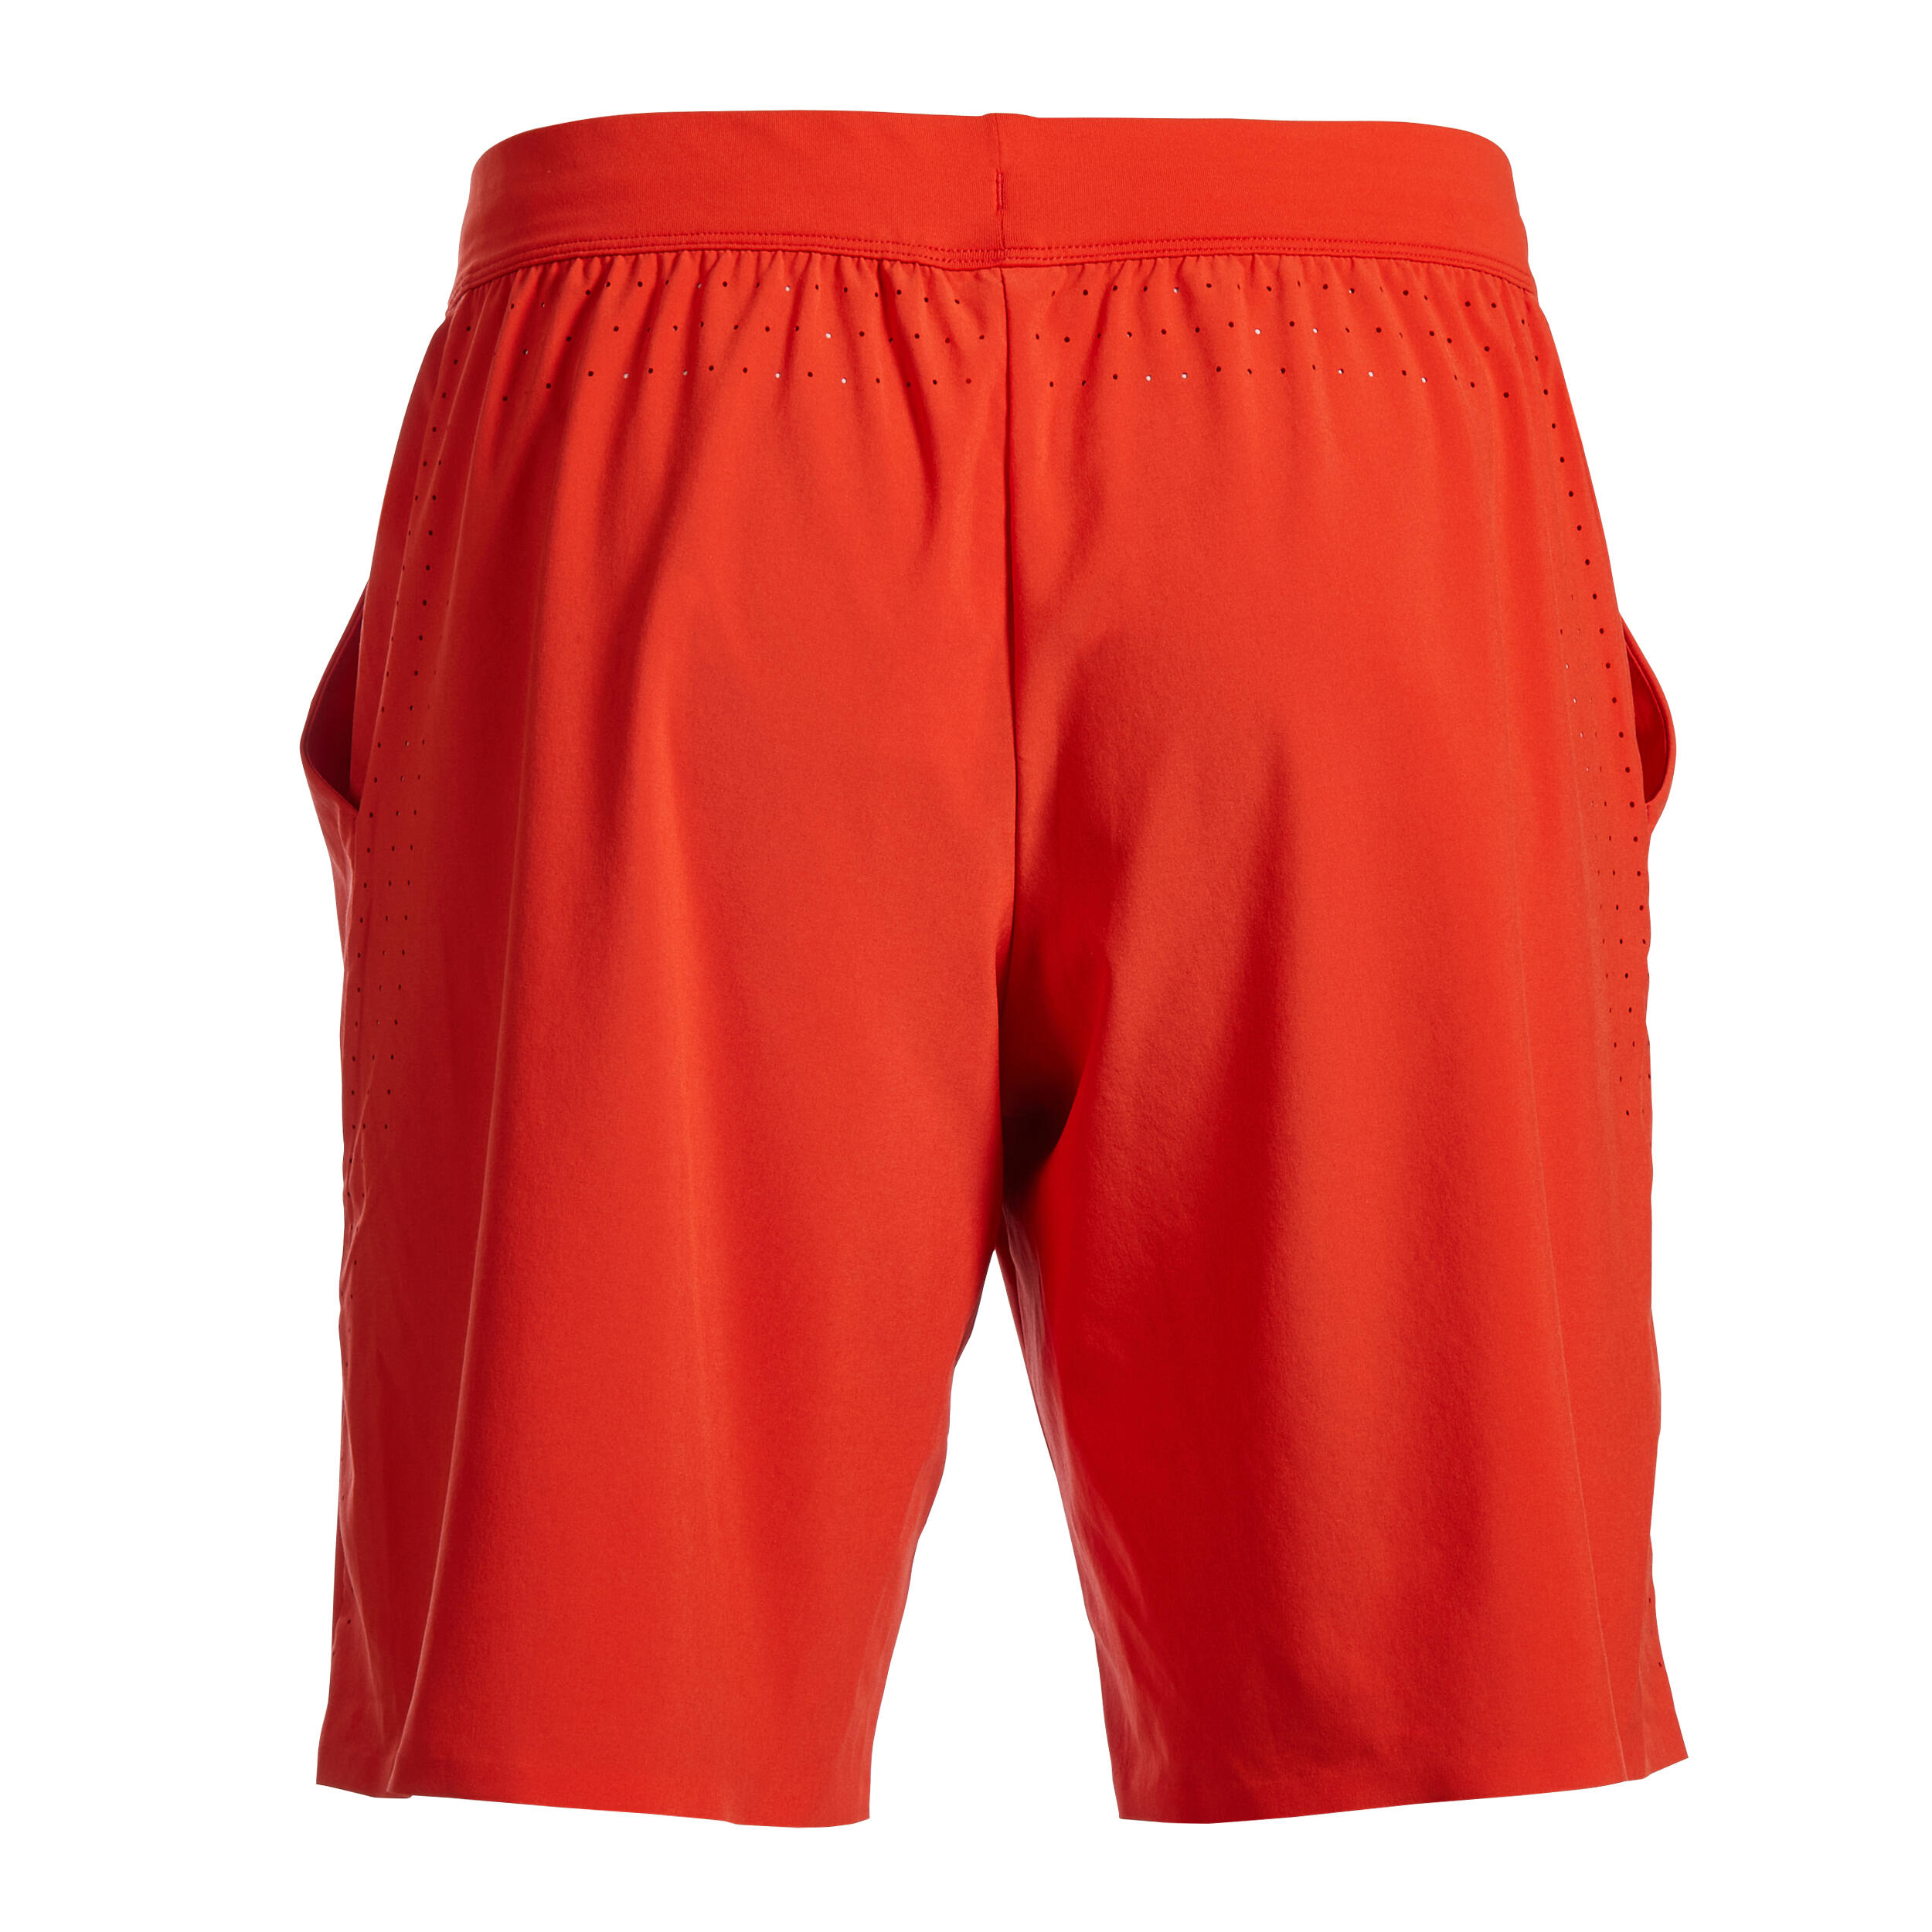 Men's Tennis Shorts TSH 900 Light - Red 8/8